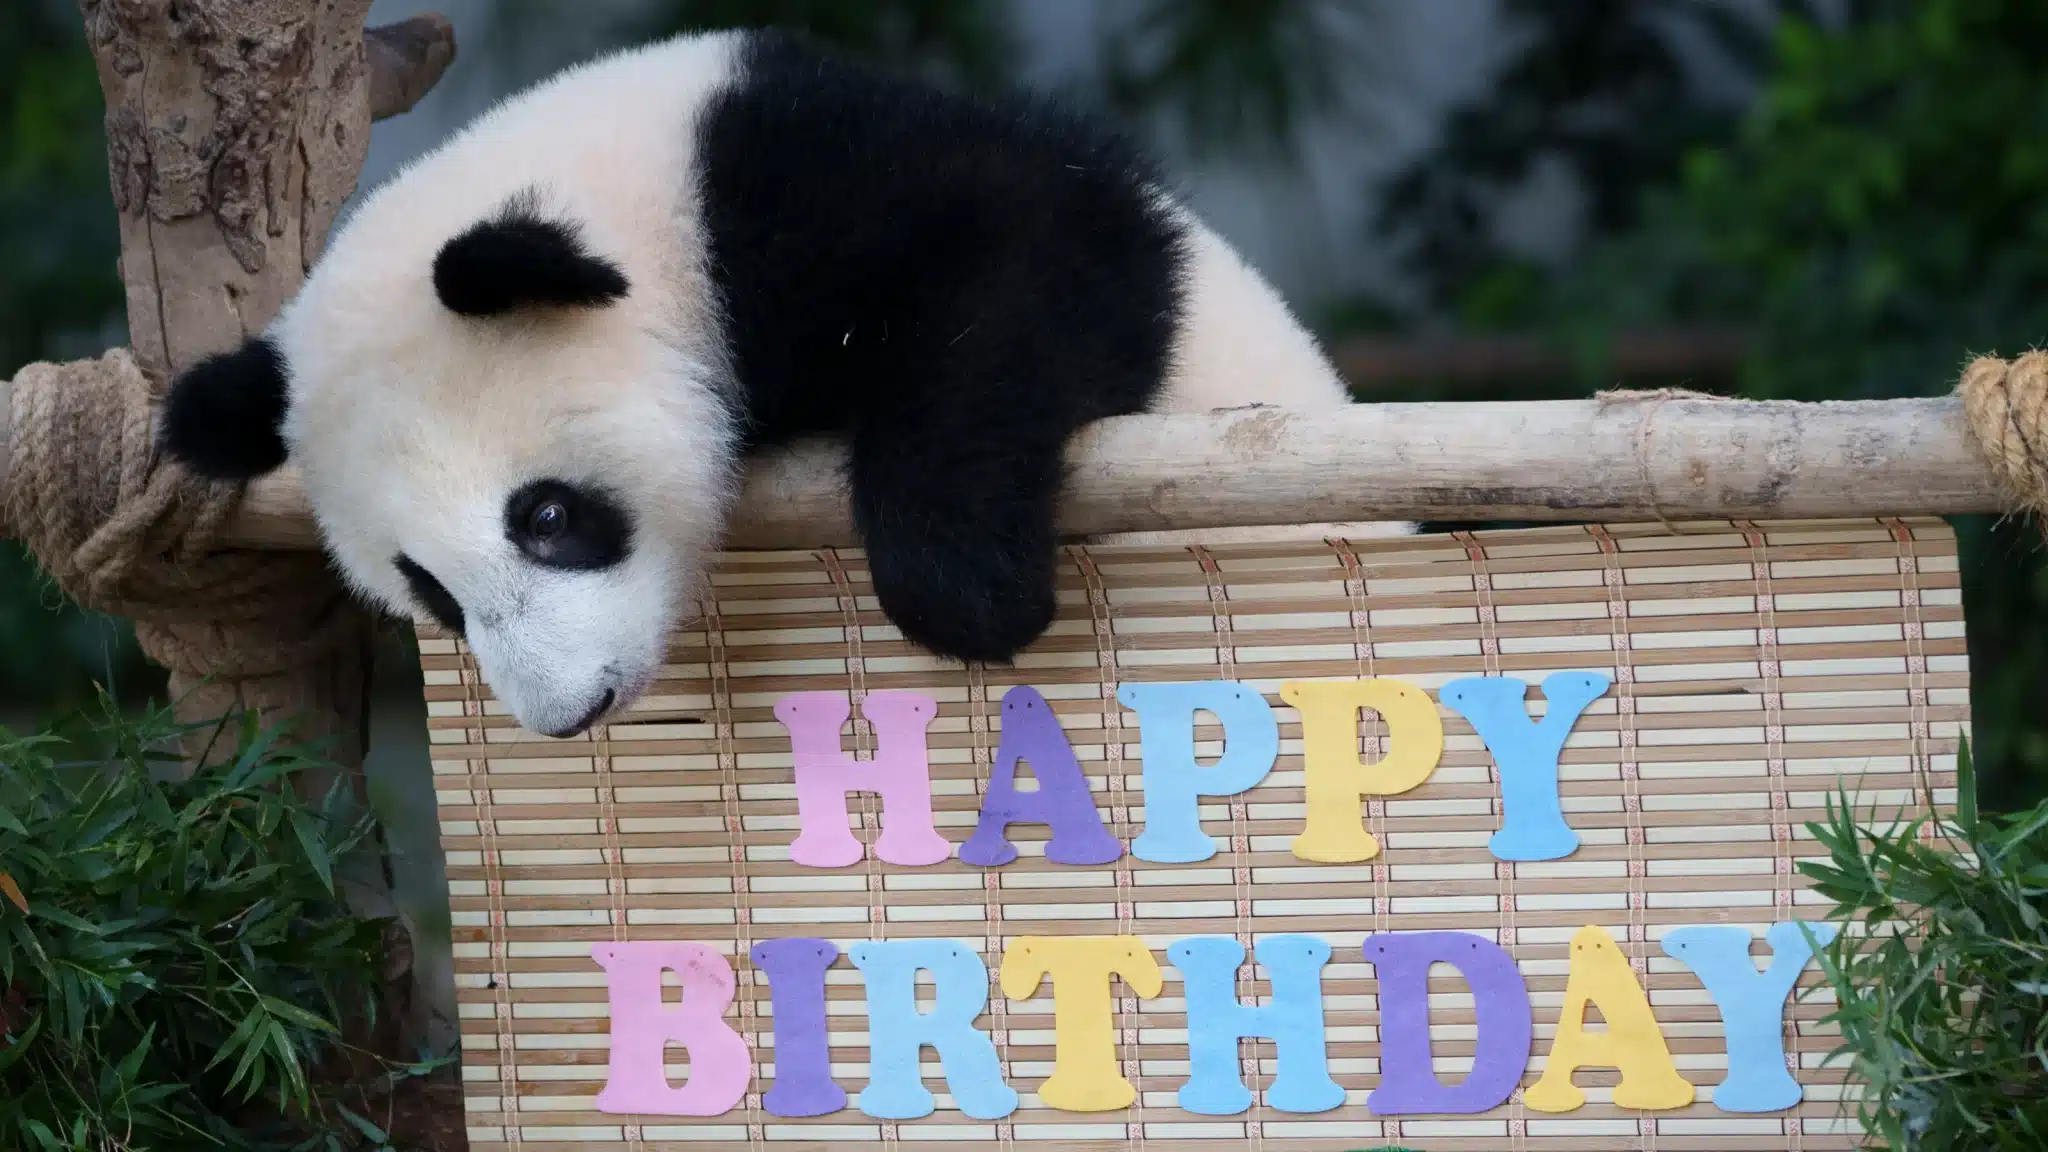 A panda bear celebrating its birthday at The Zoo: The Memorizing Match